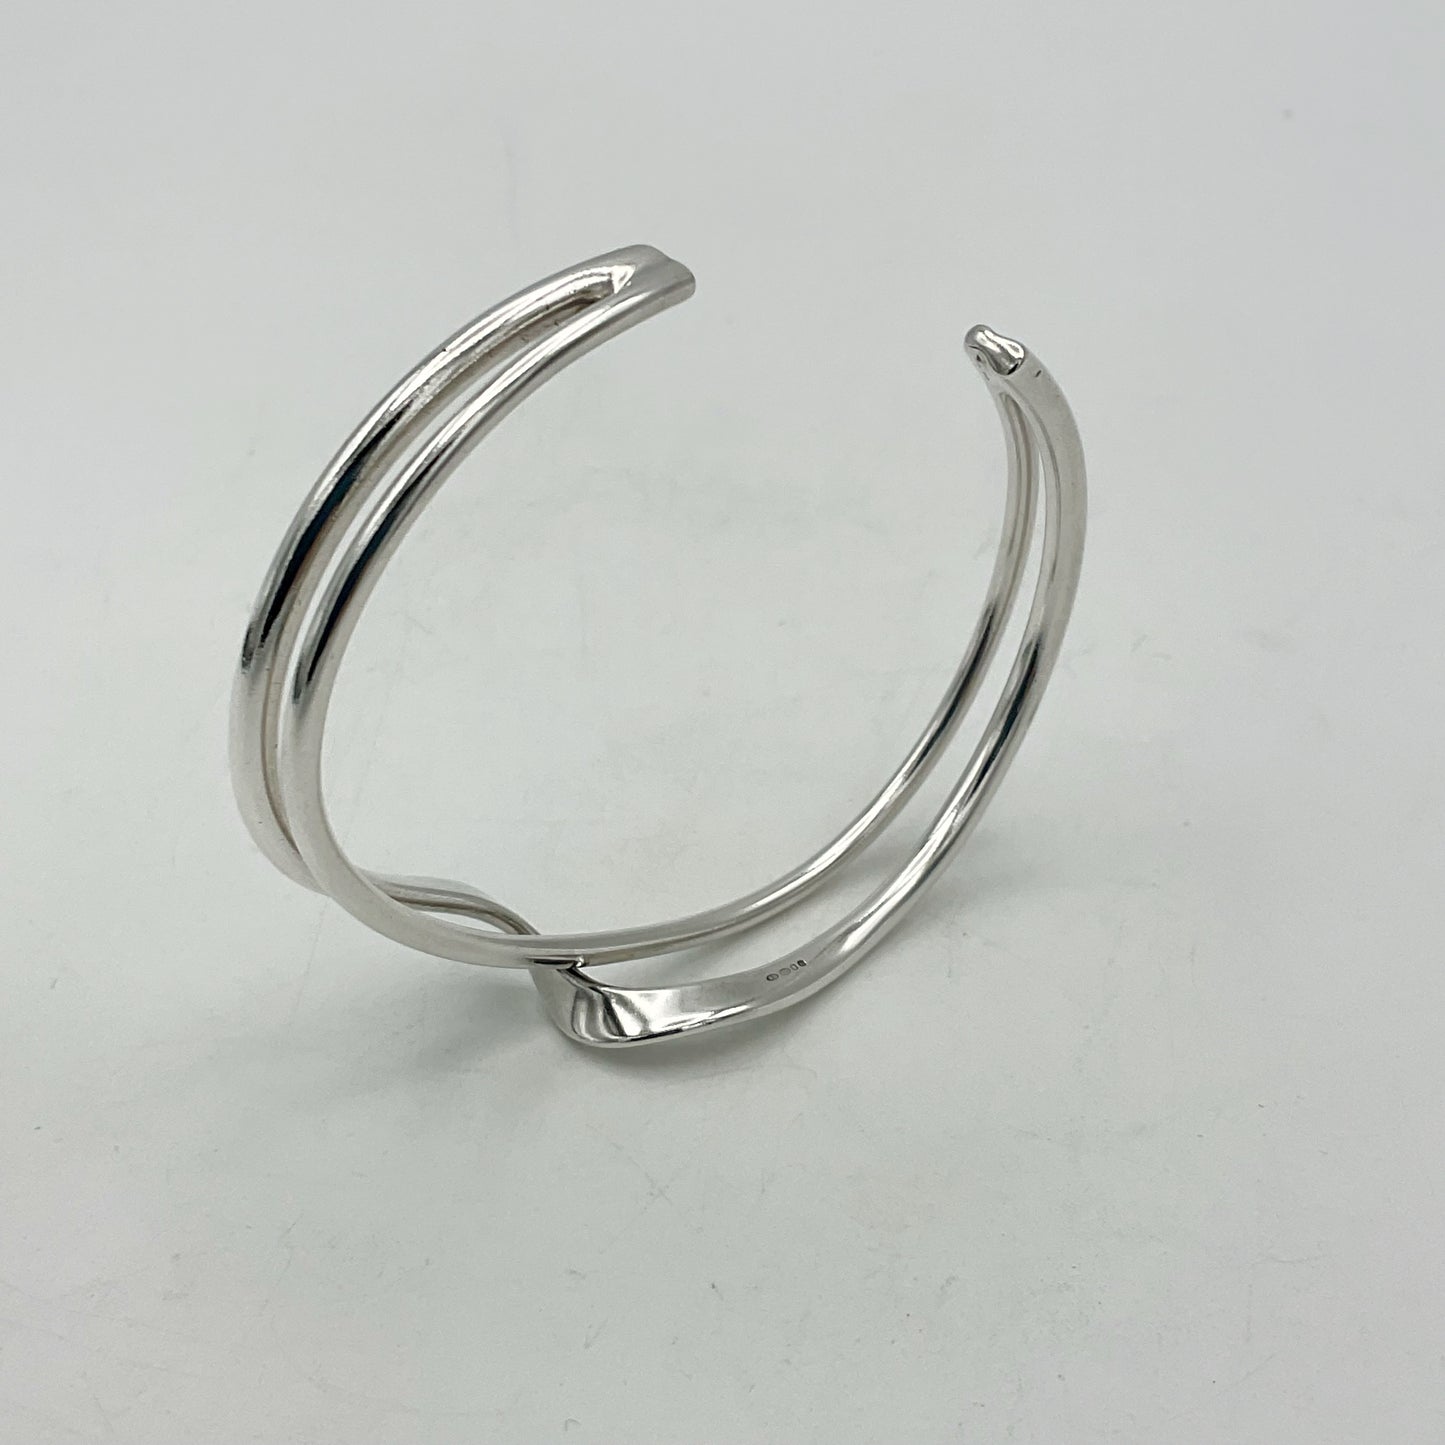 Small Sterling Silver Bangle Bracelet, Hallmarked 2007